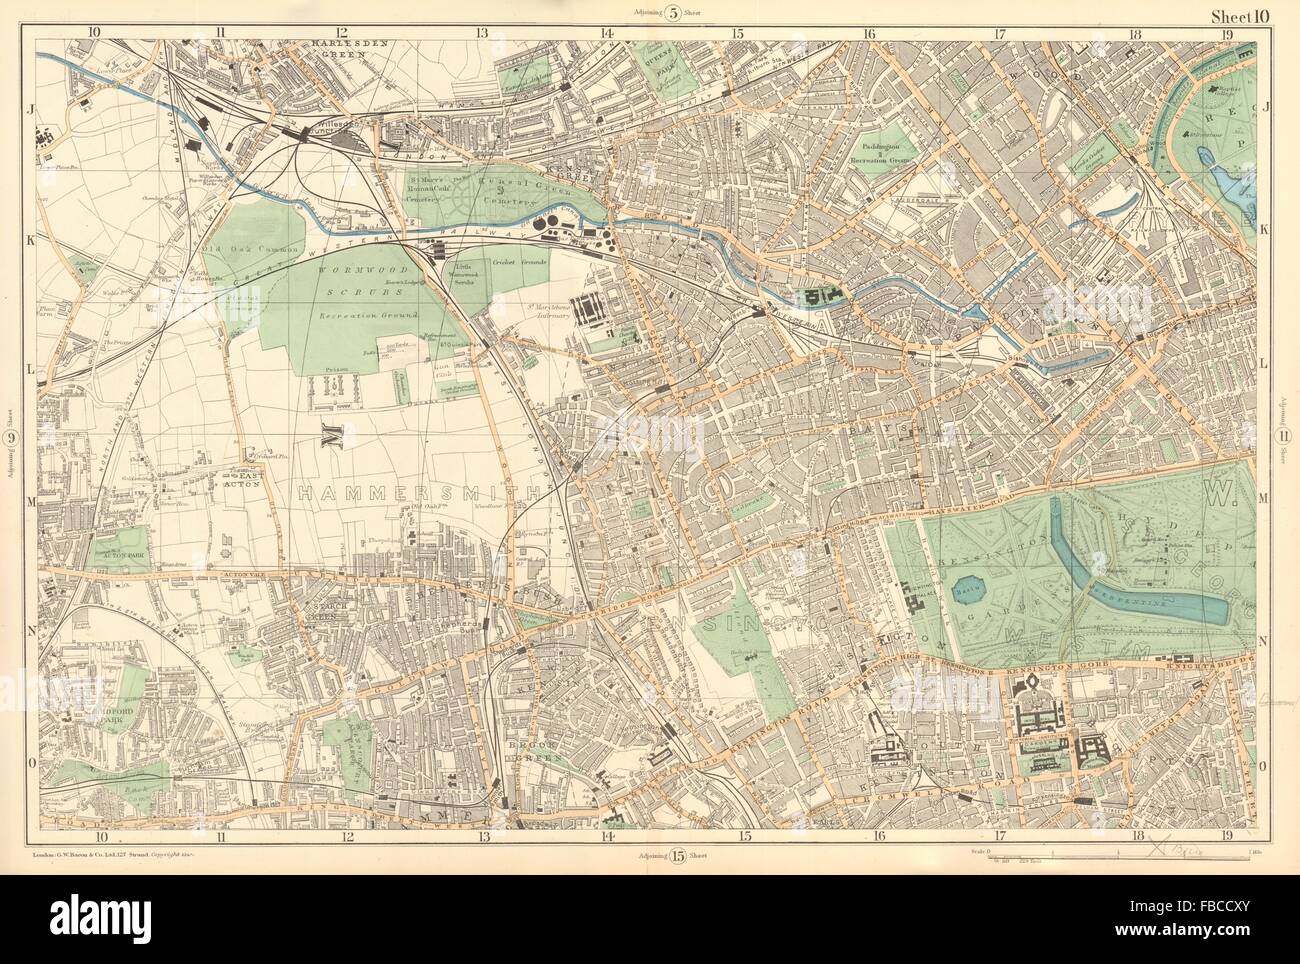 LONDON Notting Hill Kensington St Johns Wd Hammersmith Bayswater. BACON 1903 map Stock Photo